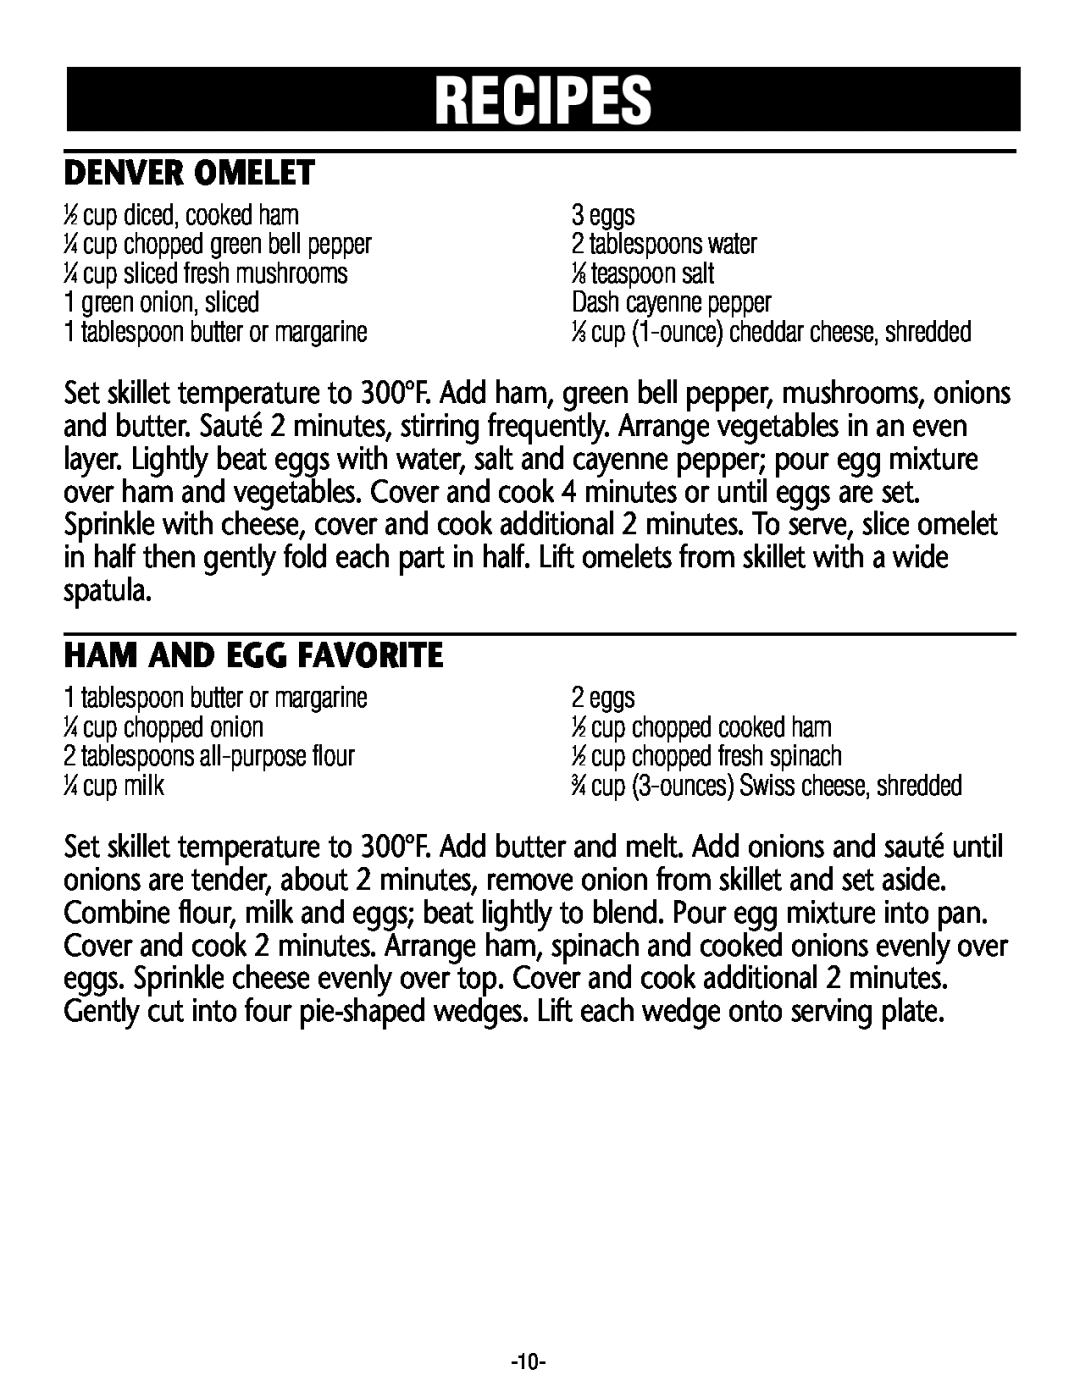 Rival S16RB manual Denver Omelet, Ham And Egg Favorite, Recipes 